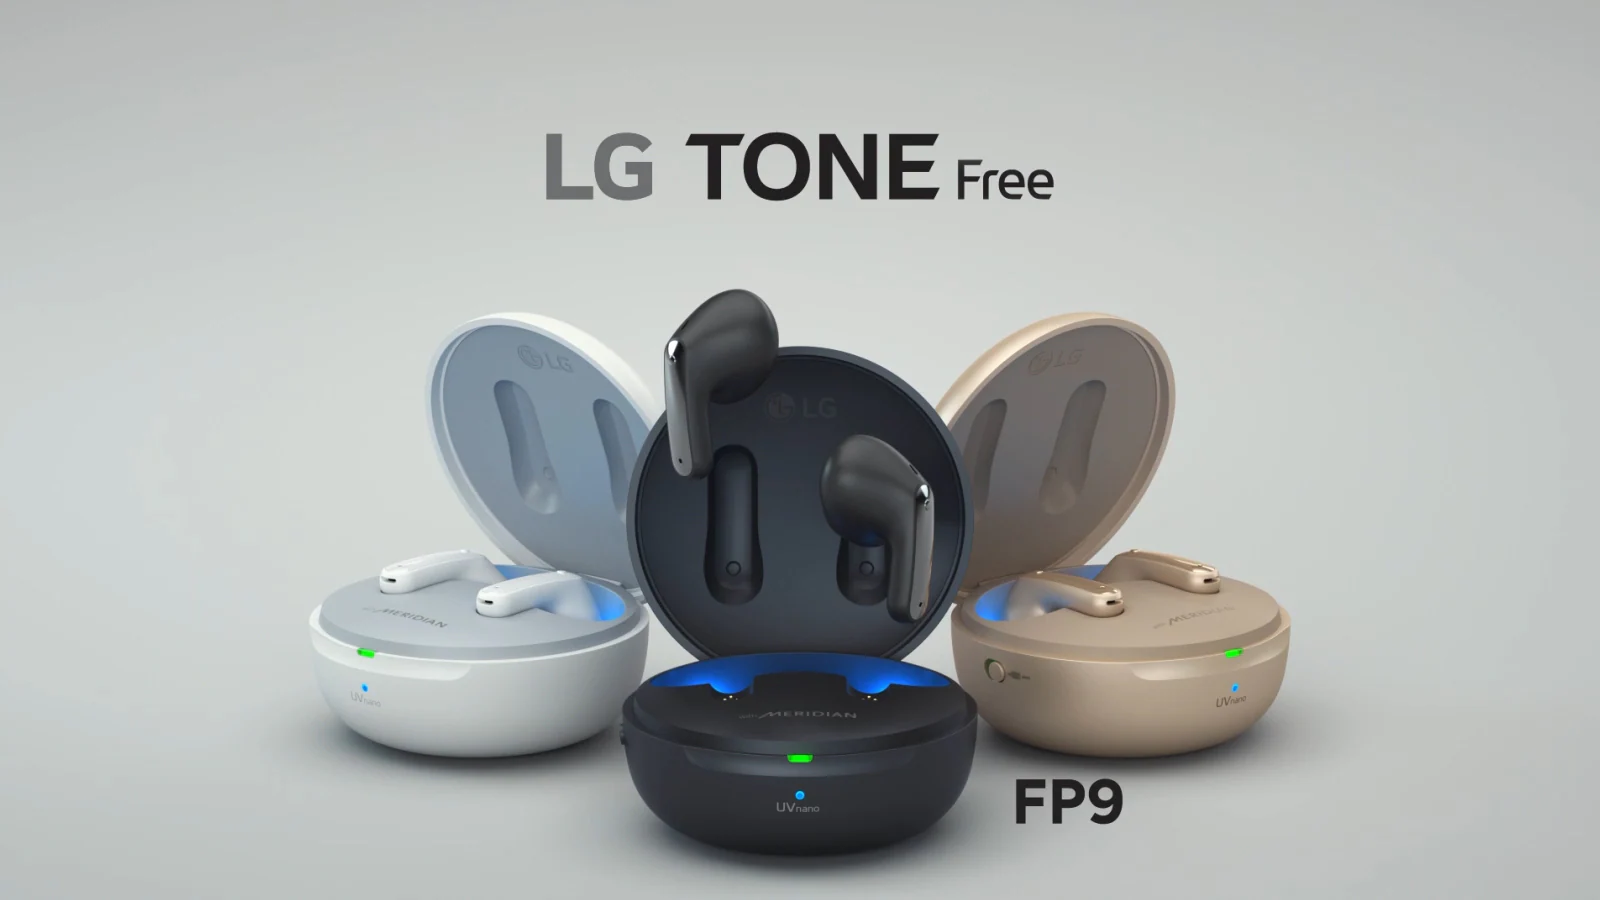 LG Tone Free FP9